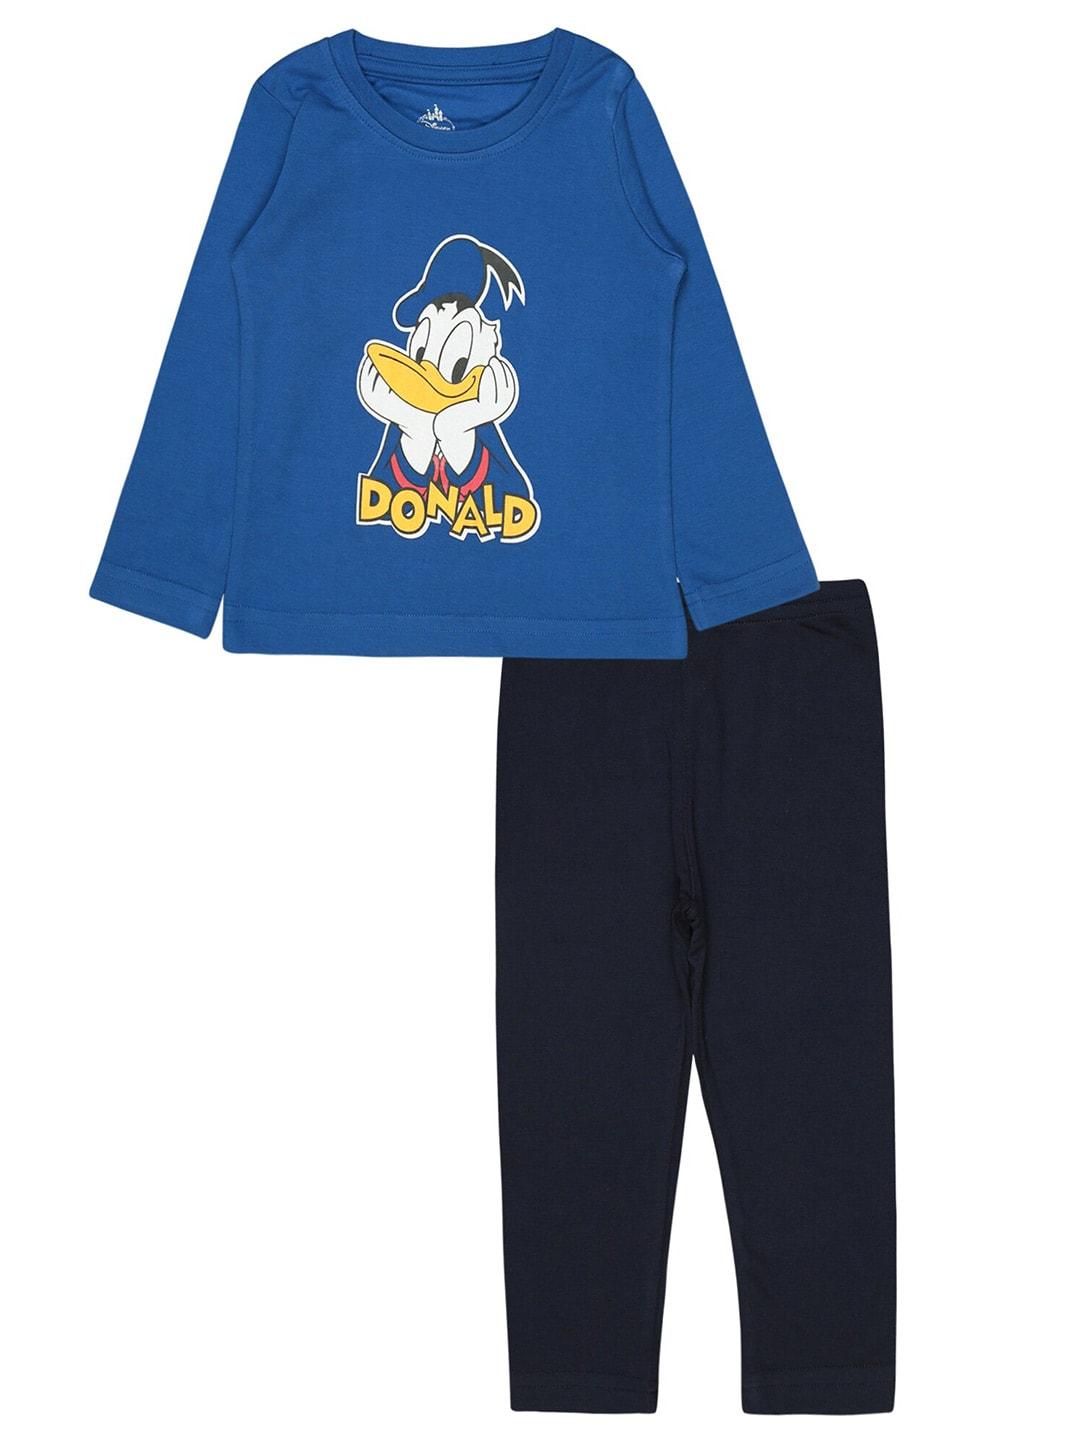 bodycare kids boys donald duck printed t-shirt with pyjamas